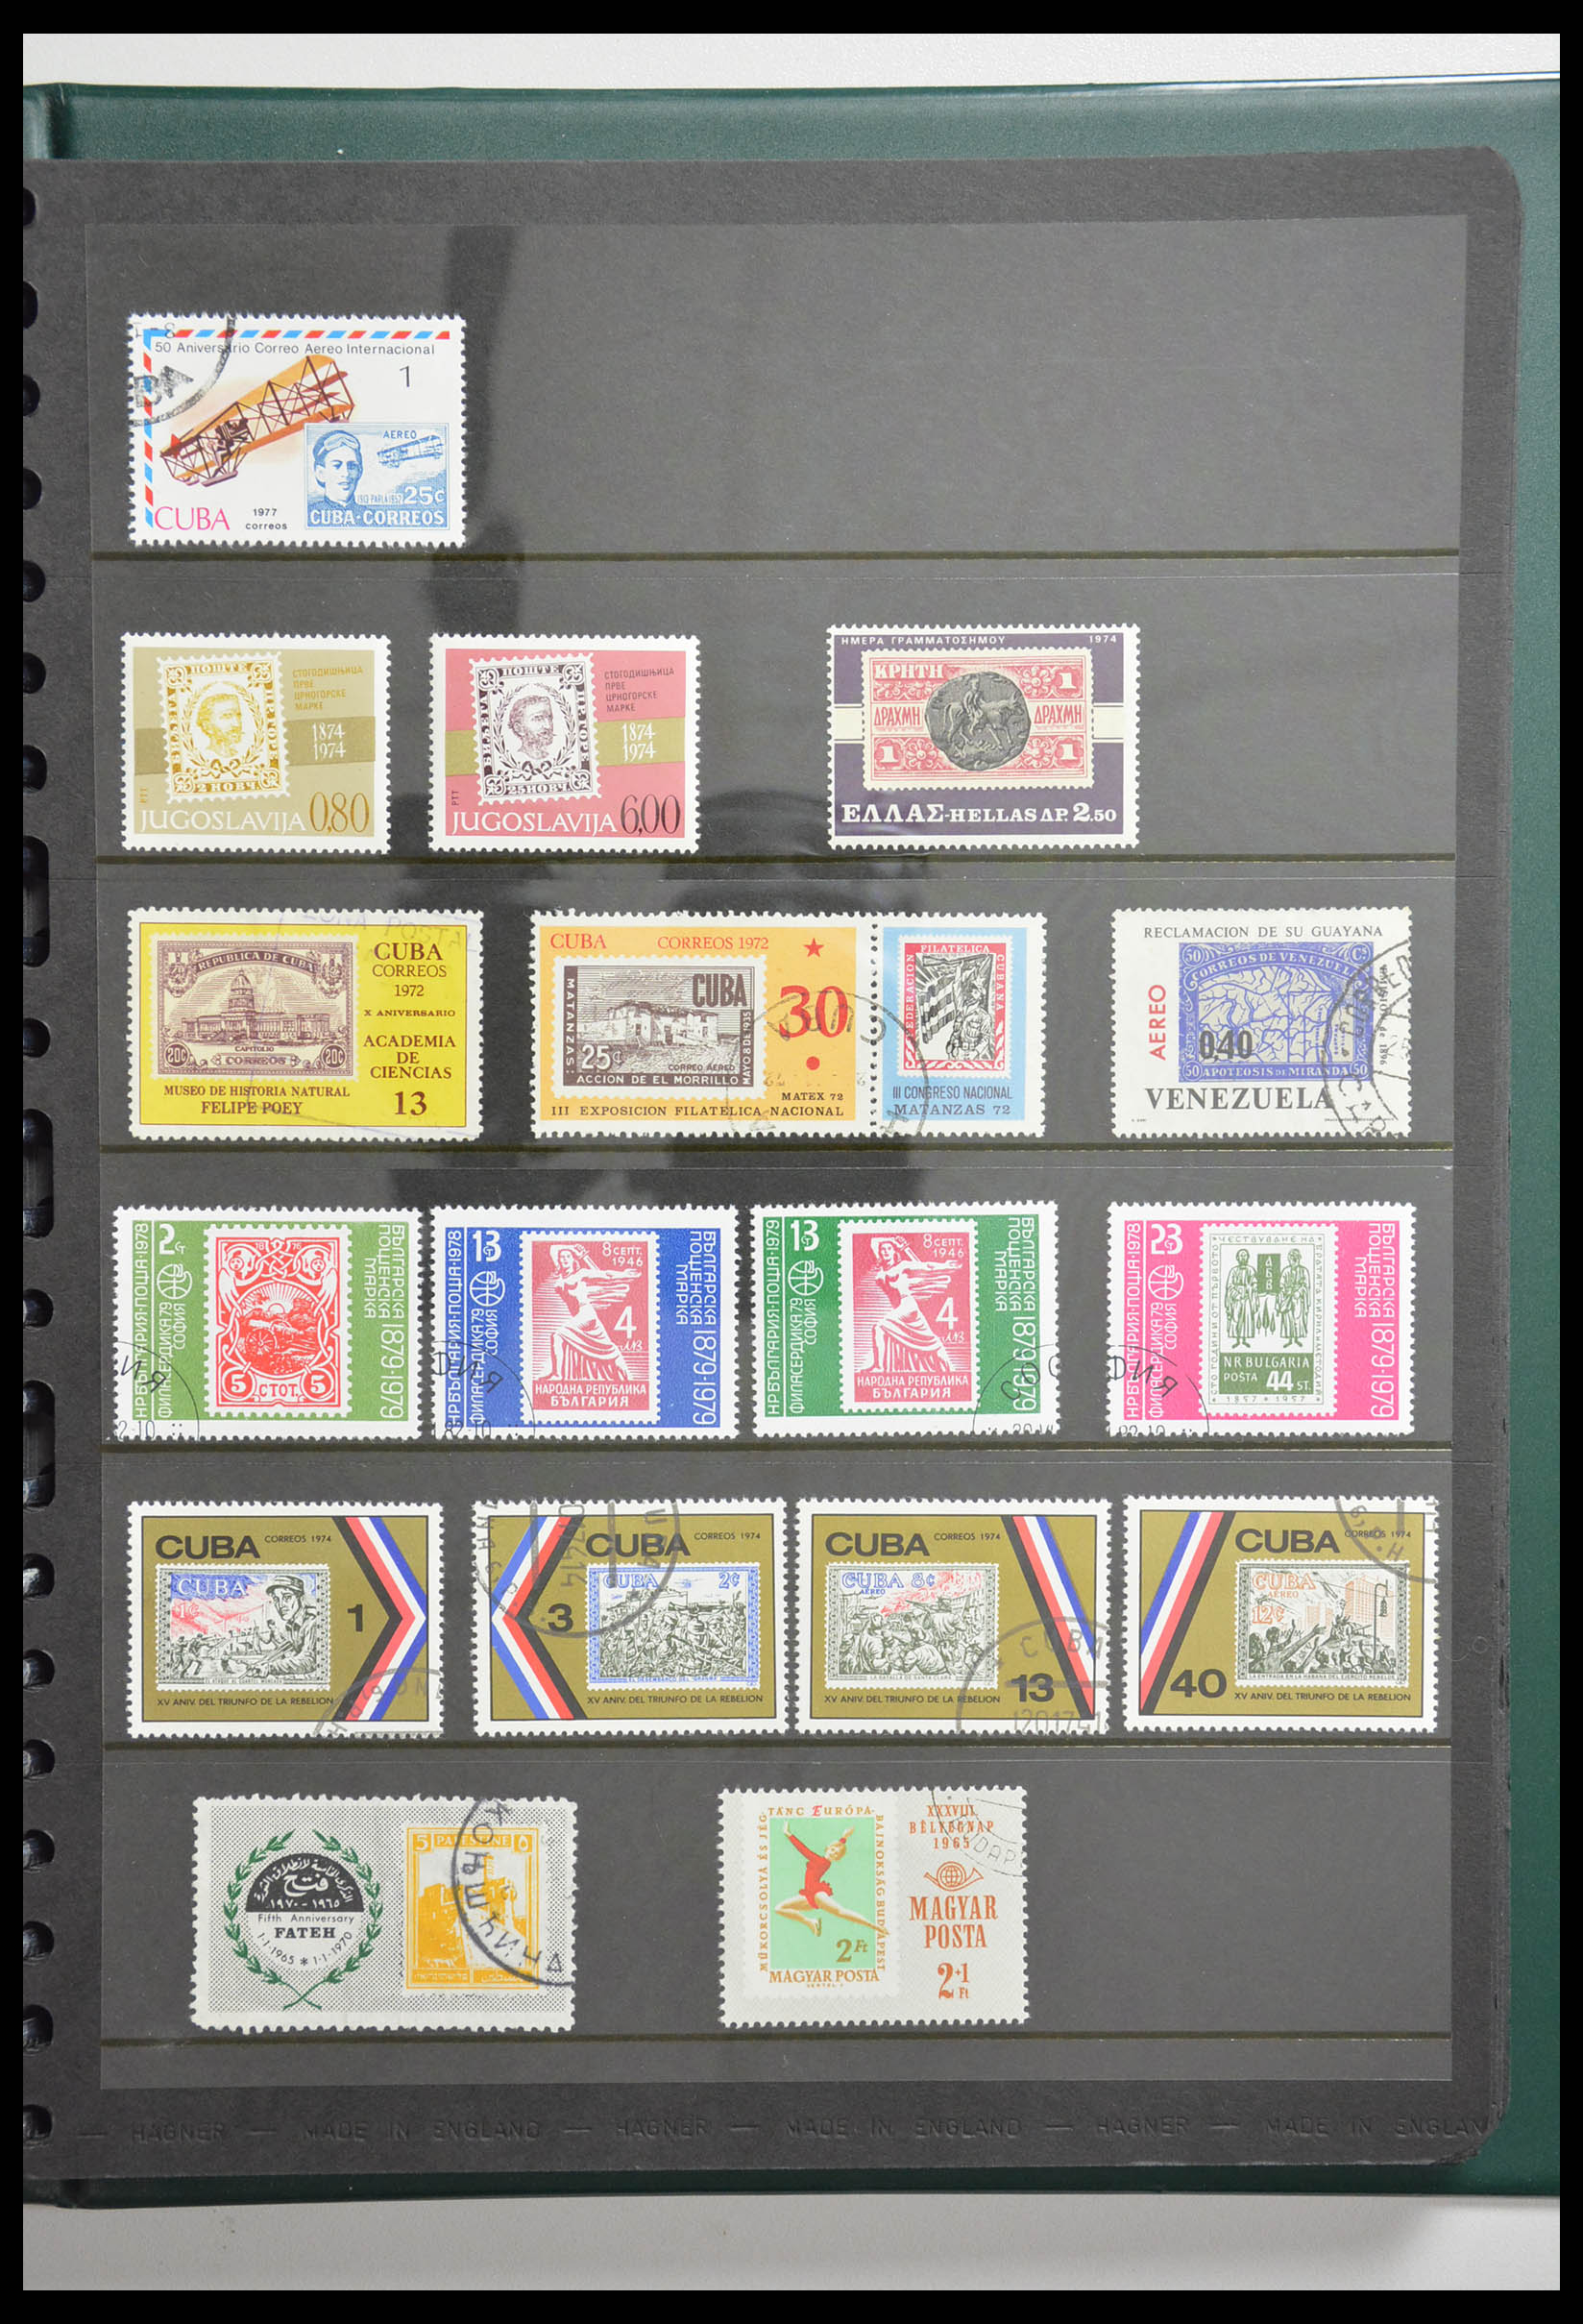 28337 019 - 28337 Postzegel op postzegel 1840-2001.